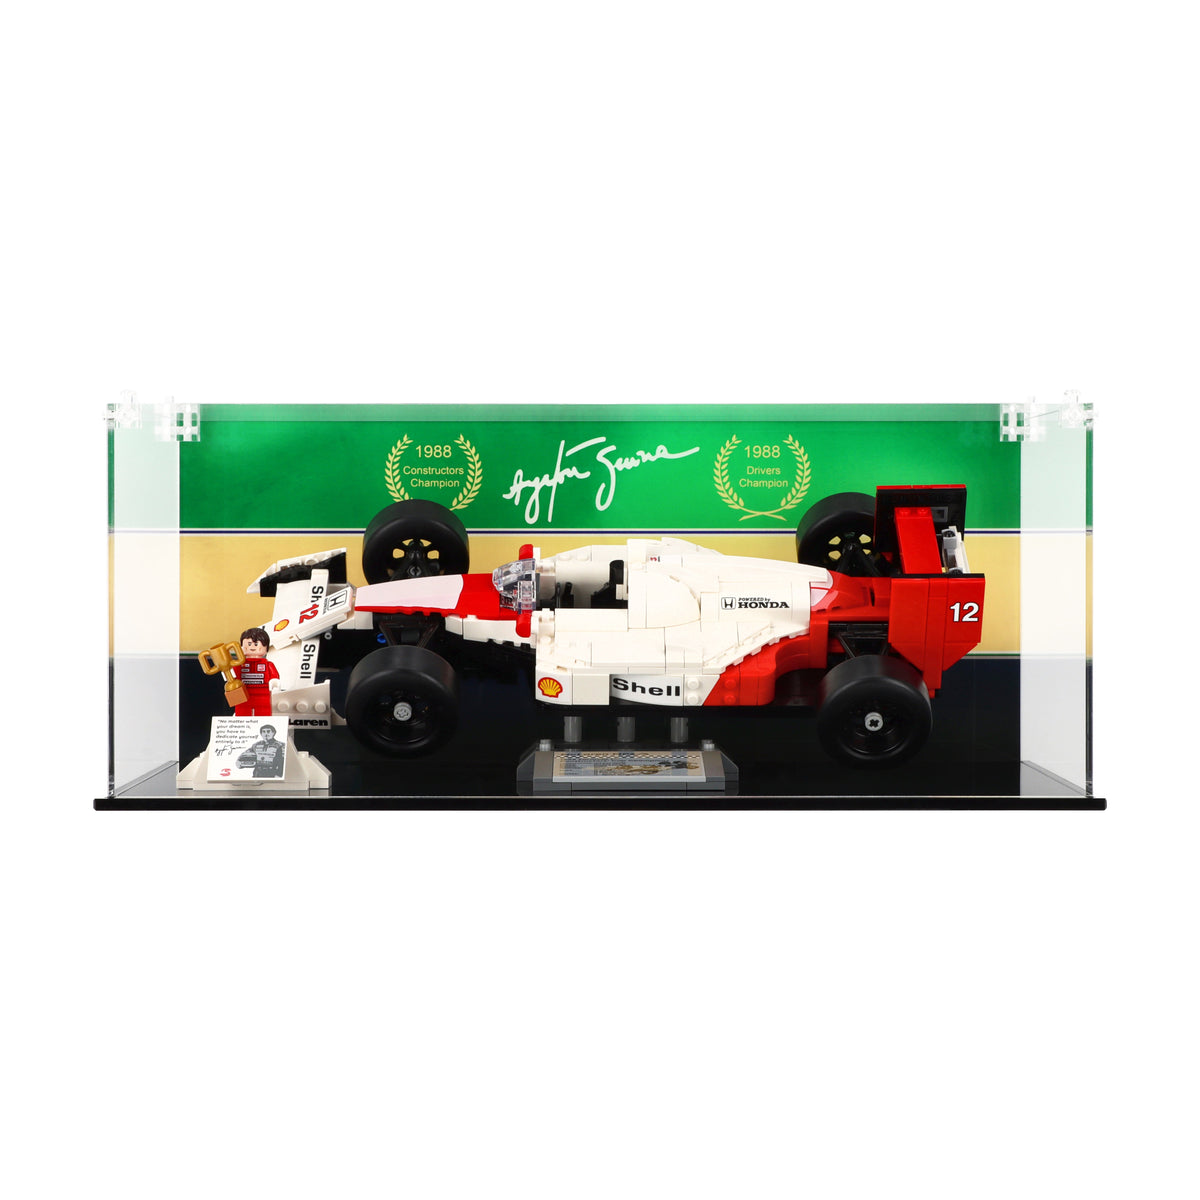 Lego 10330 McLaren MP4/4 & Ayrton Senna - Display Case